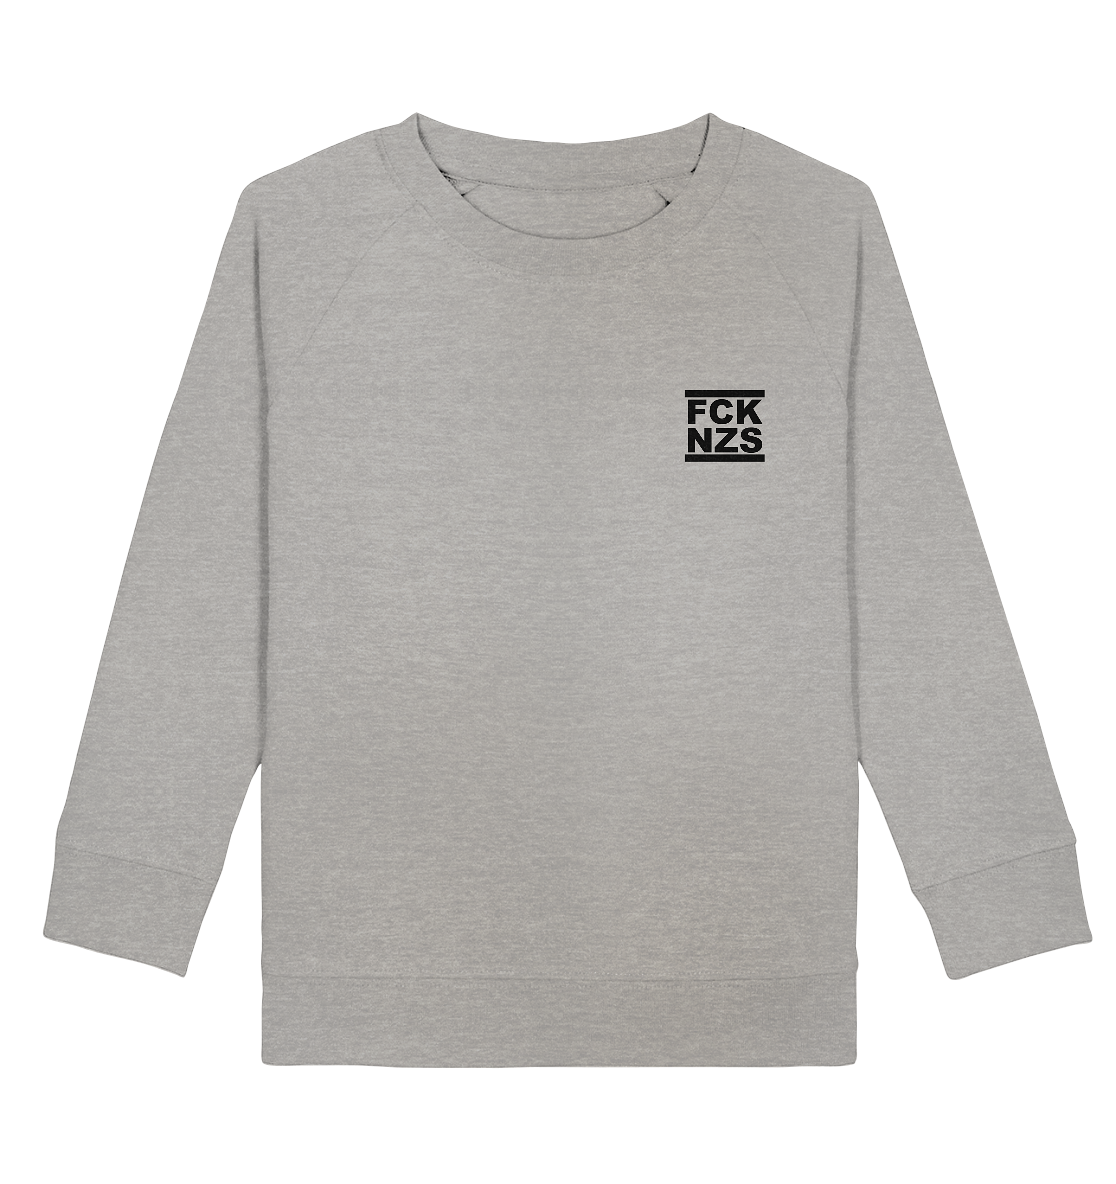 N.O.S.W. BLOCK Gegen Rechts Sweater "FCK NZS" beidseitig bedruckter Kids UNISEX Organic Sweatshirt heather grau